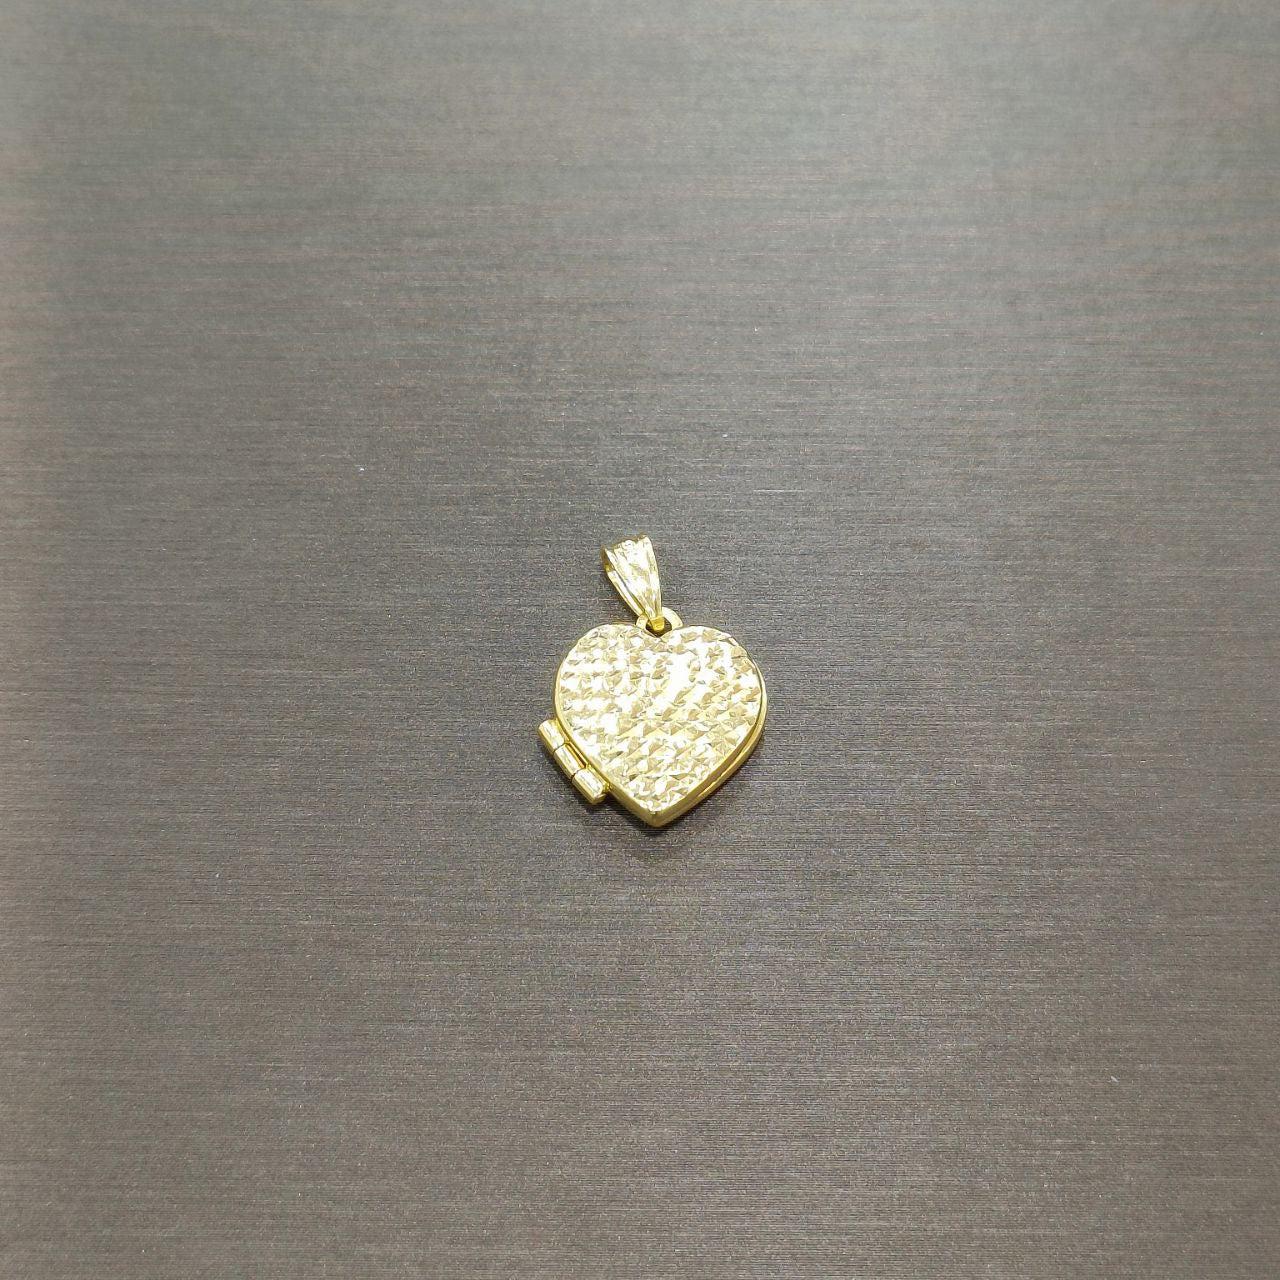 22k / 916 gold heart photo frame pendant-916 gold-Best Gold Shop